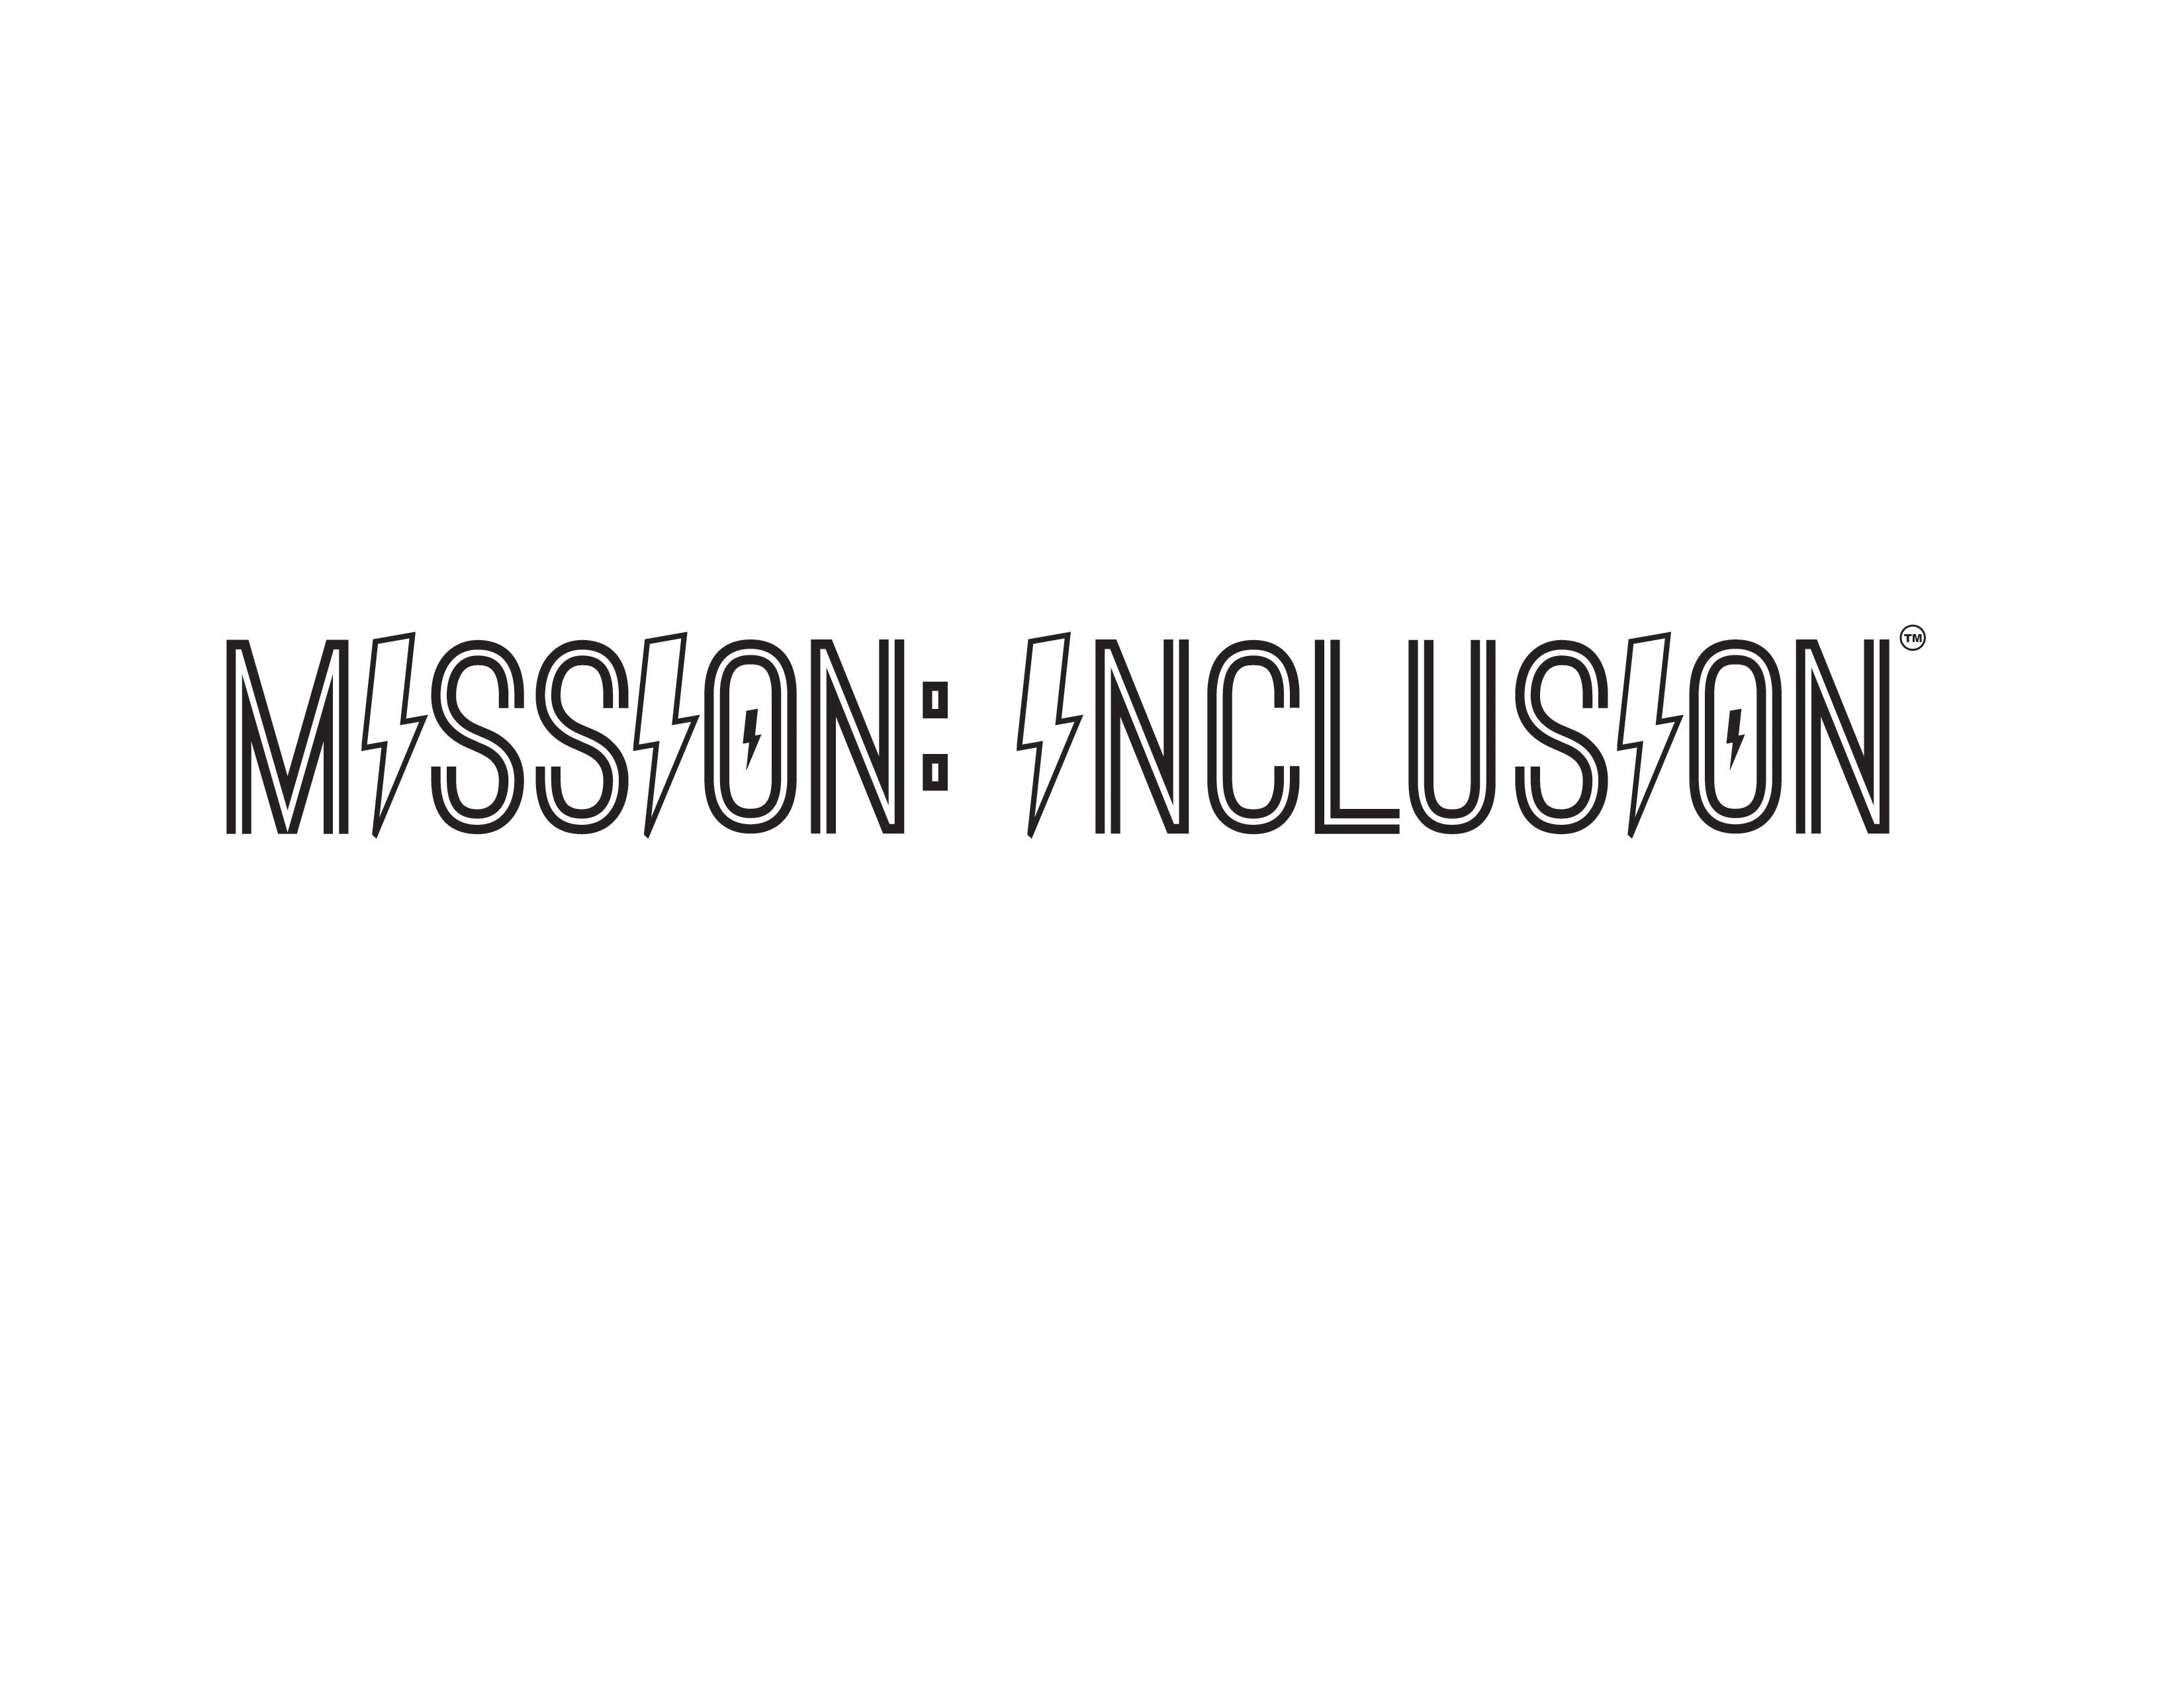 Mission:Inclusion